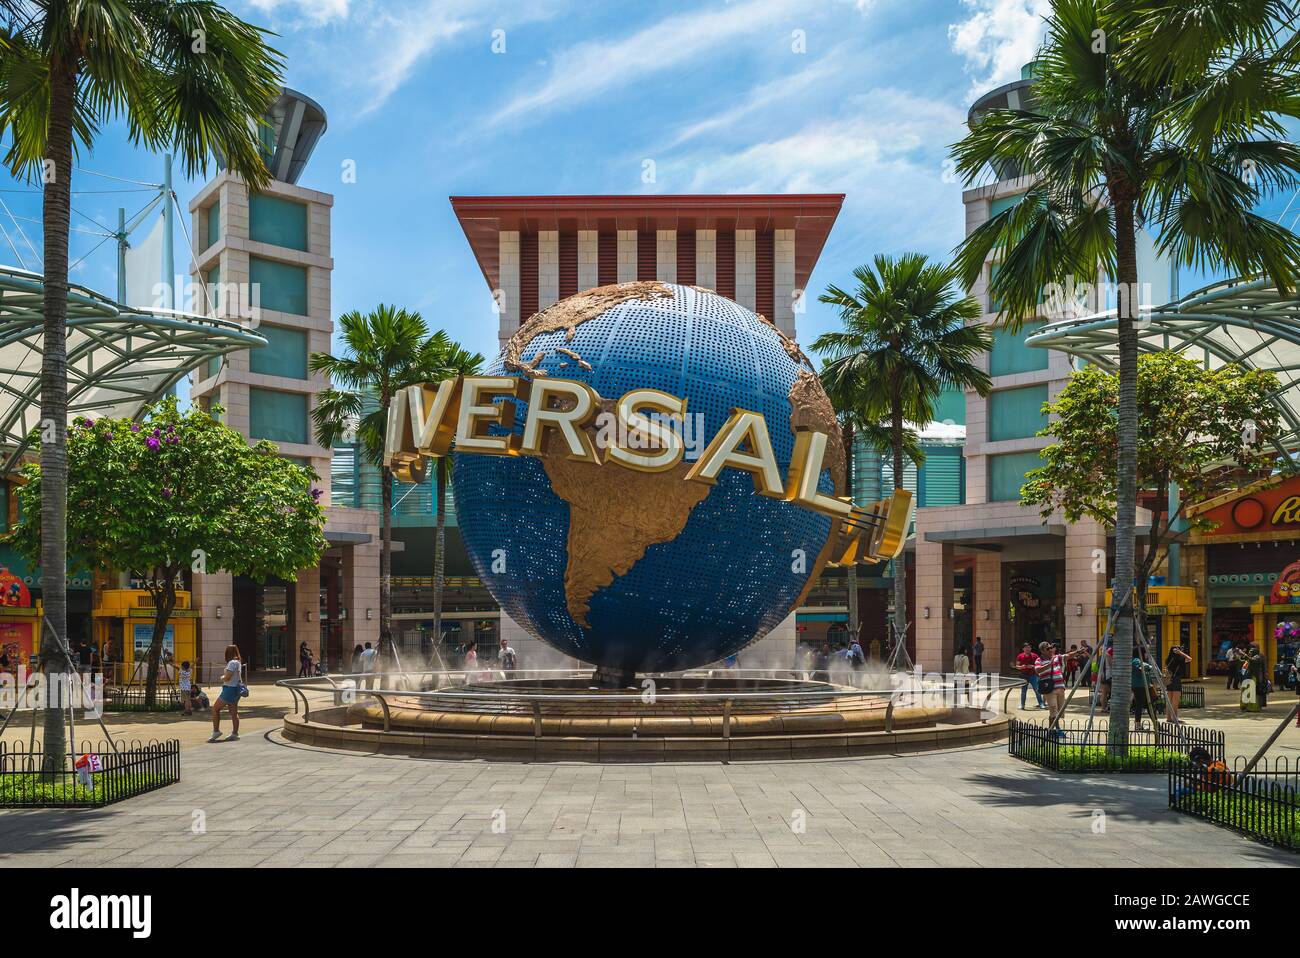 Sentosa, Singapore - February 5, 2020: Universal Studios Singapore, a theme park located within Resorts World Sentosa, was opened on 18 March, 2010 Stock Photo